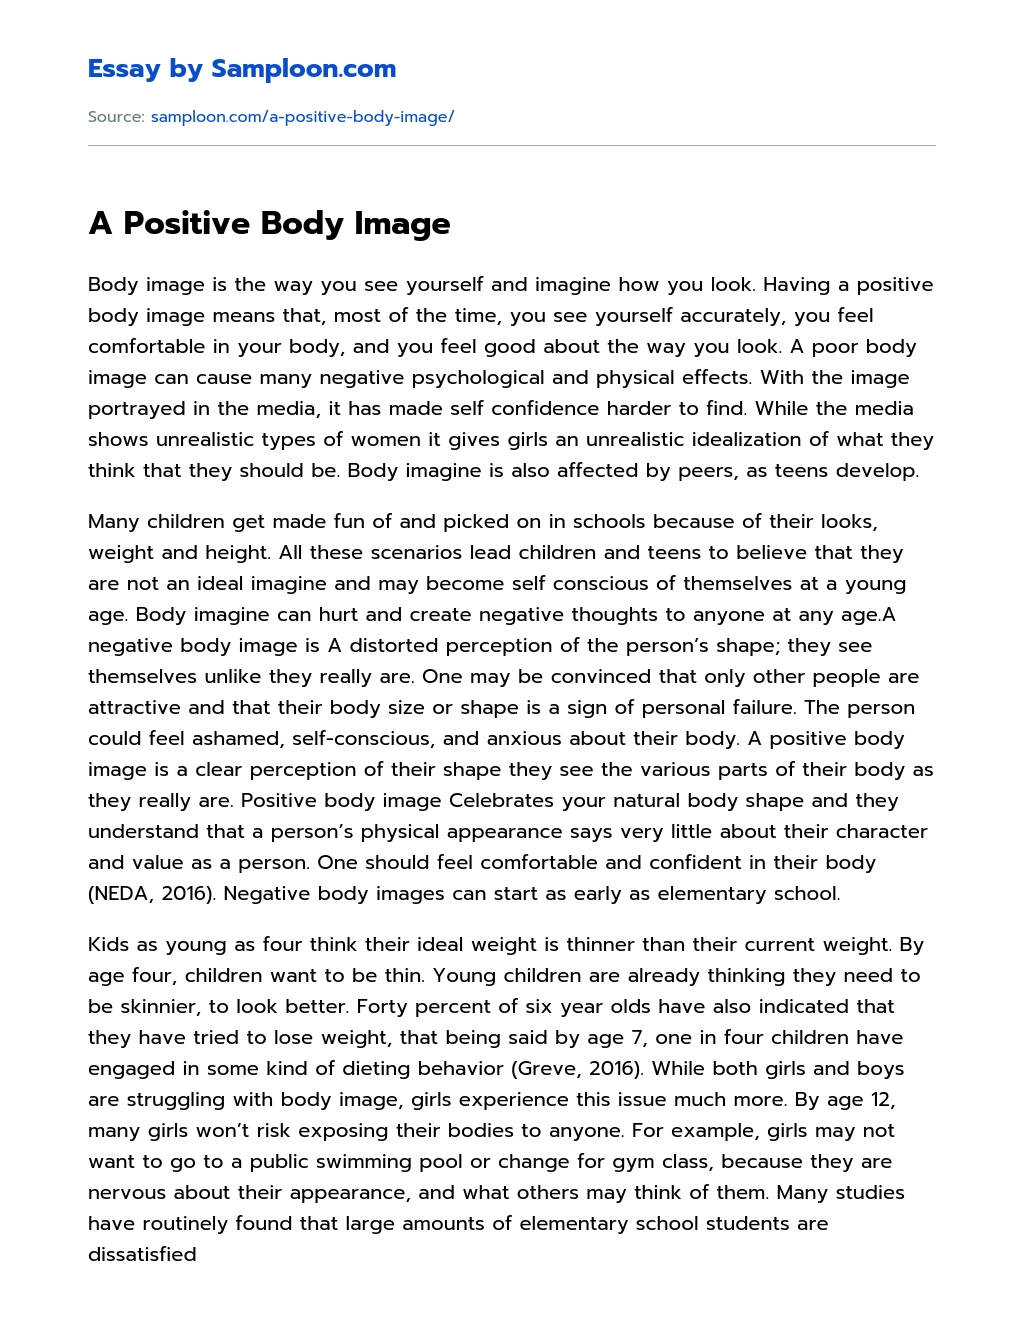 A Positive Body Image essay